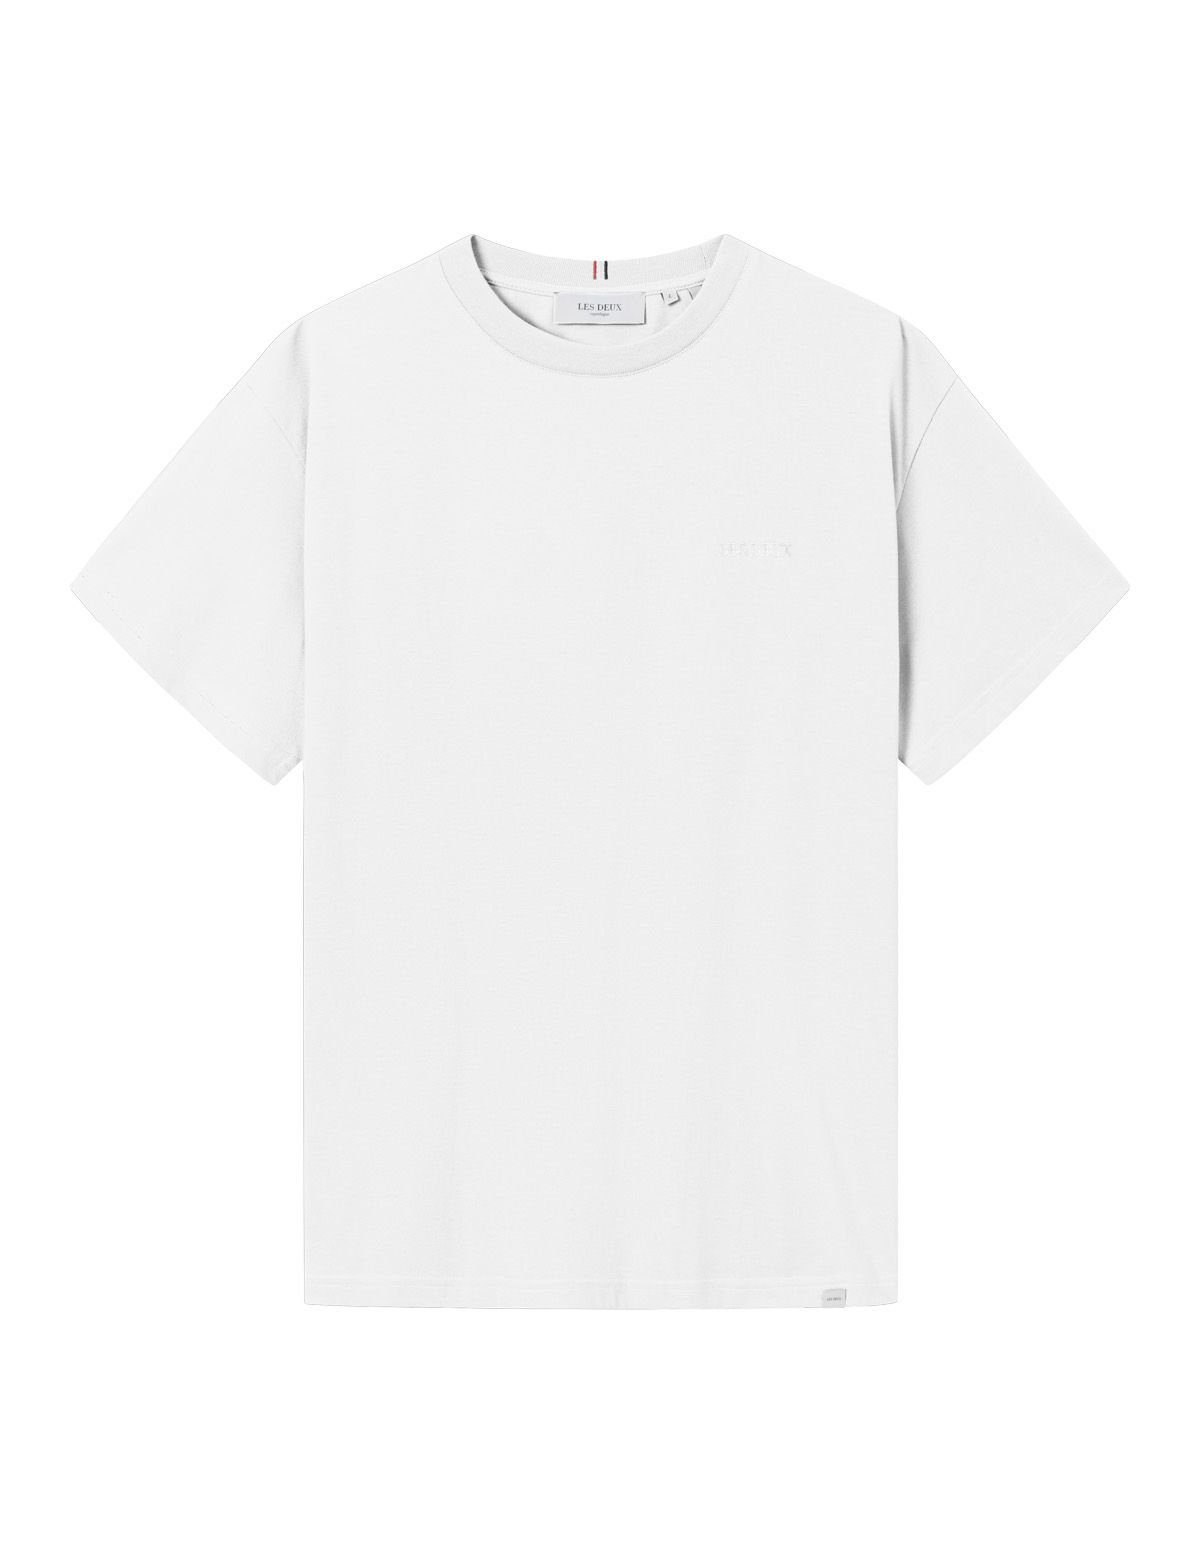 Les Sa Deux 201810-White/Dark T-Shirt